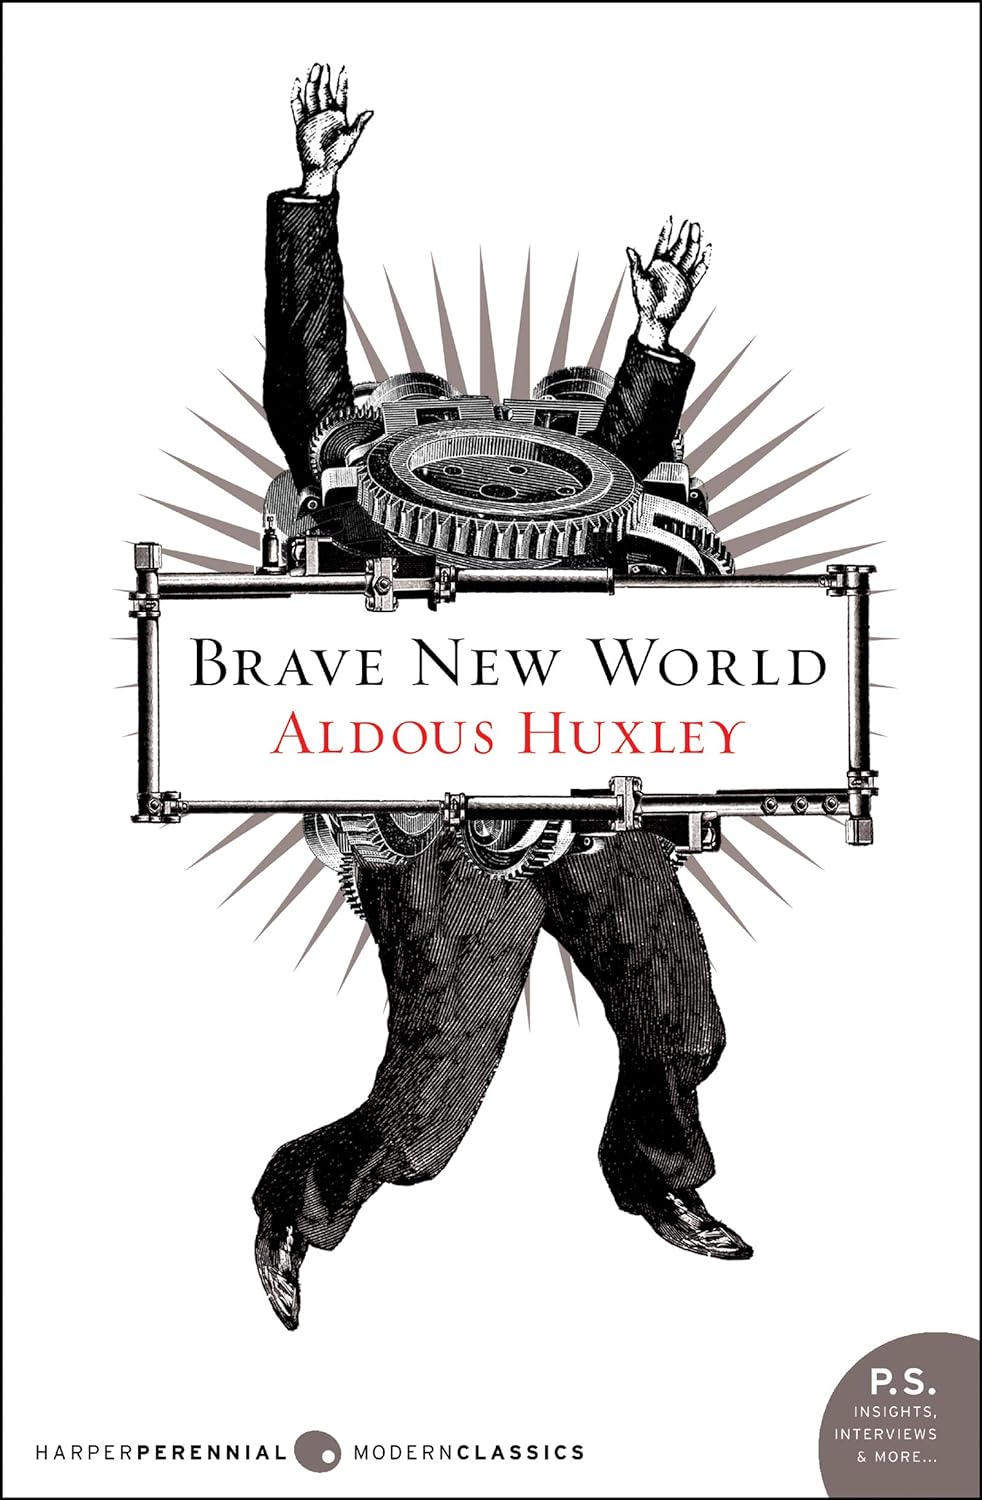 Brave New World by Aldous Huxley (1932)